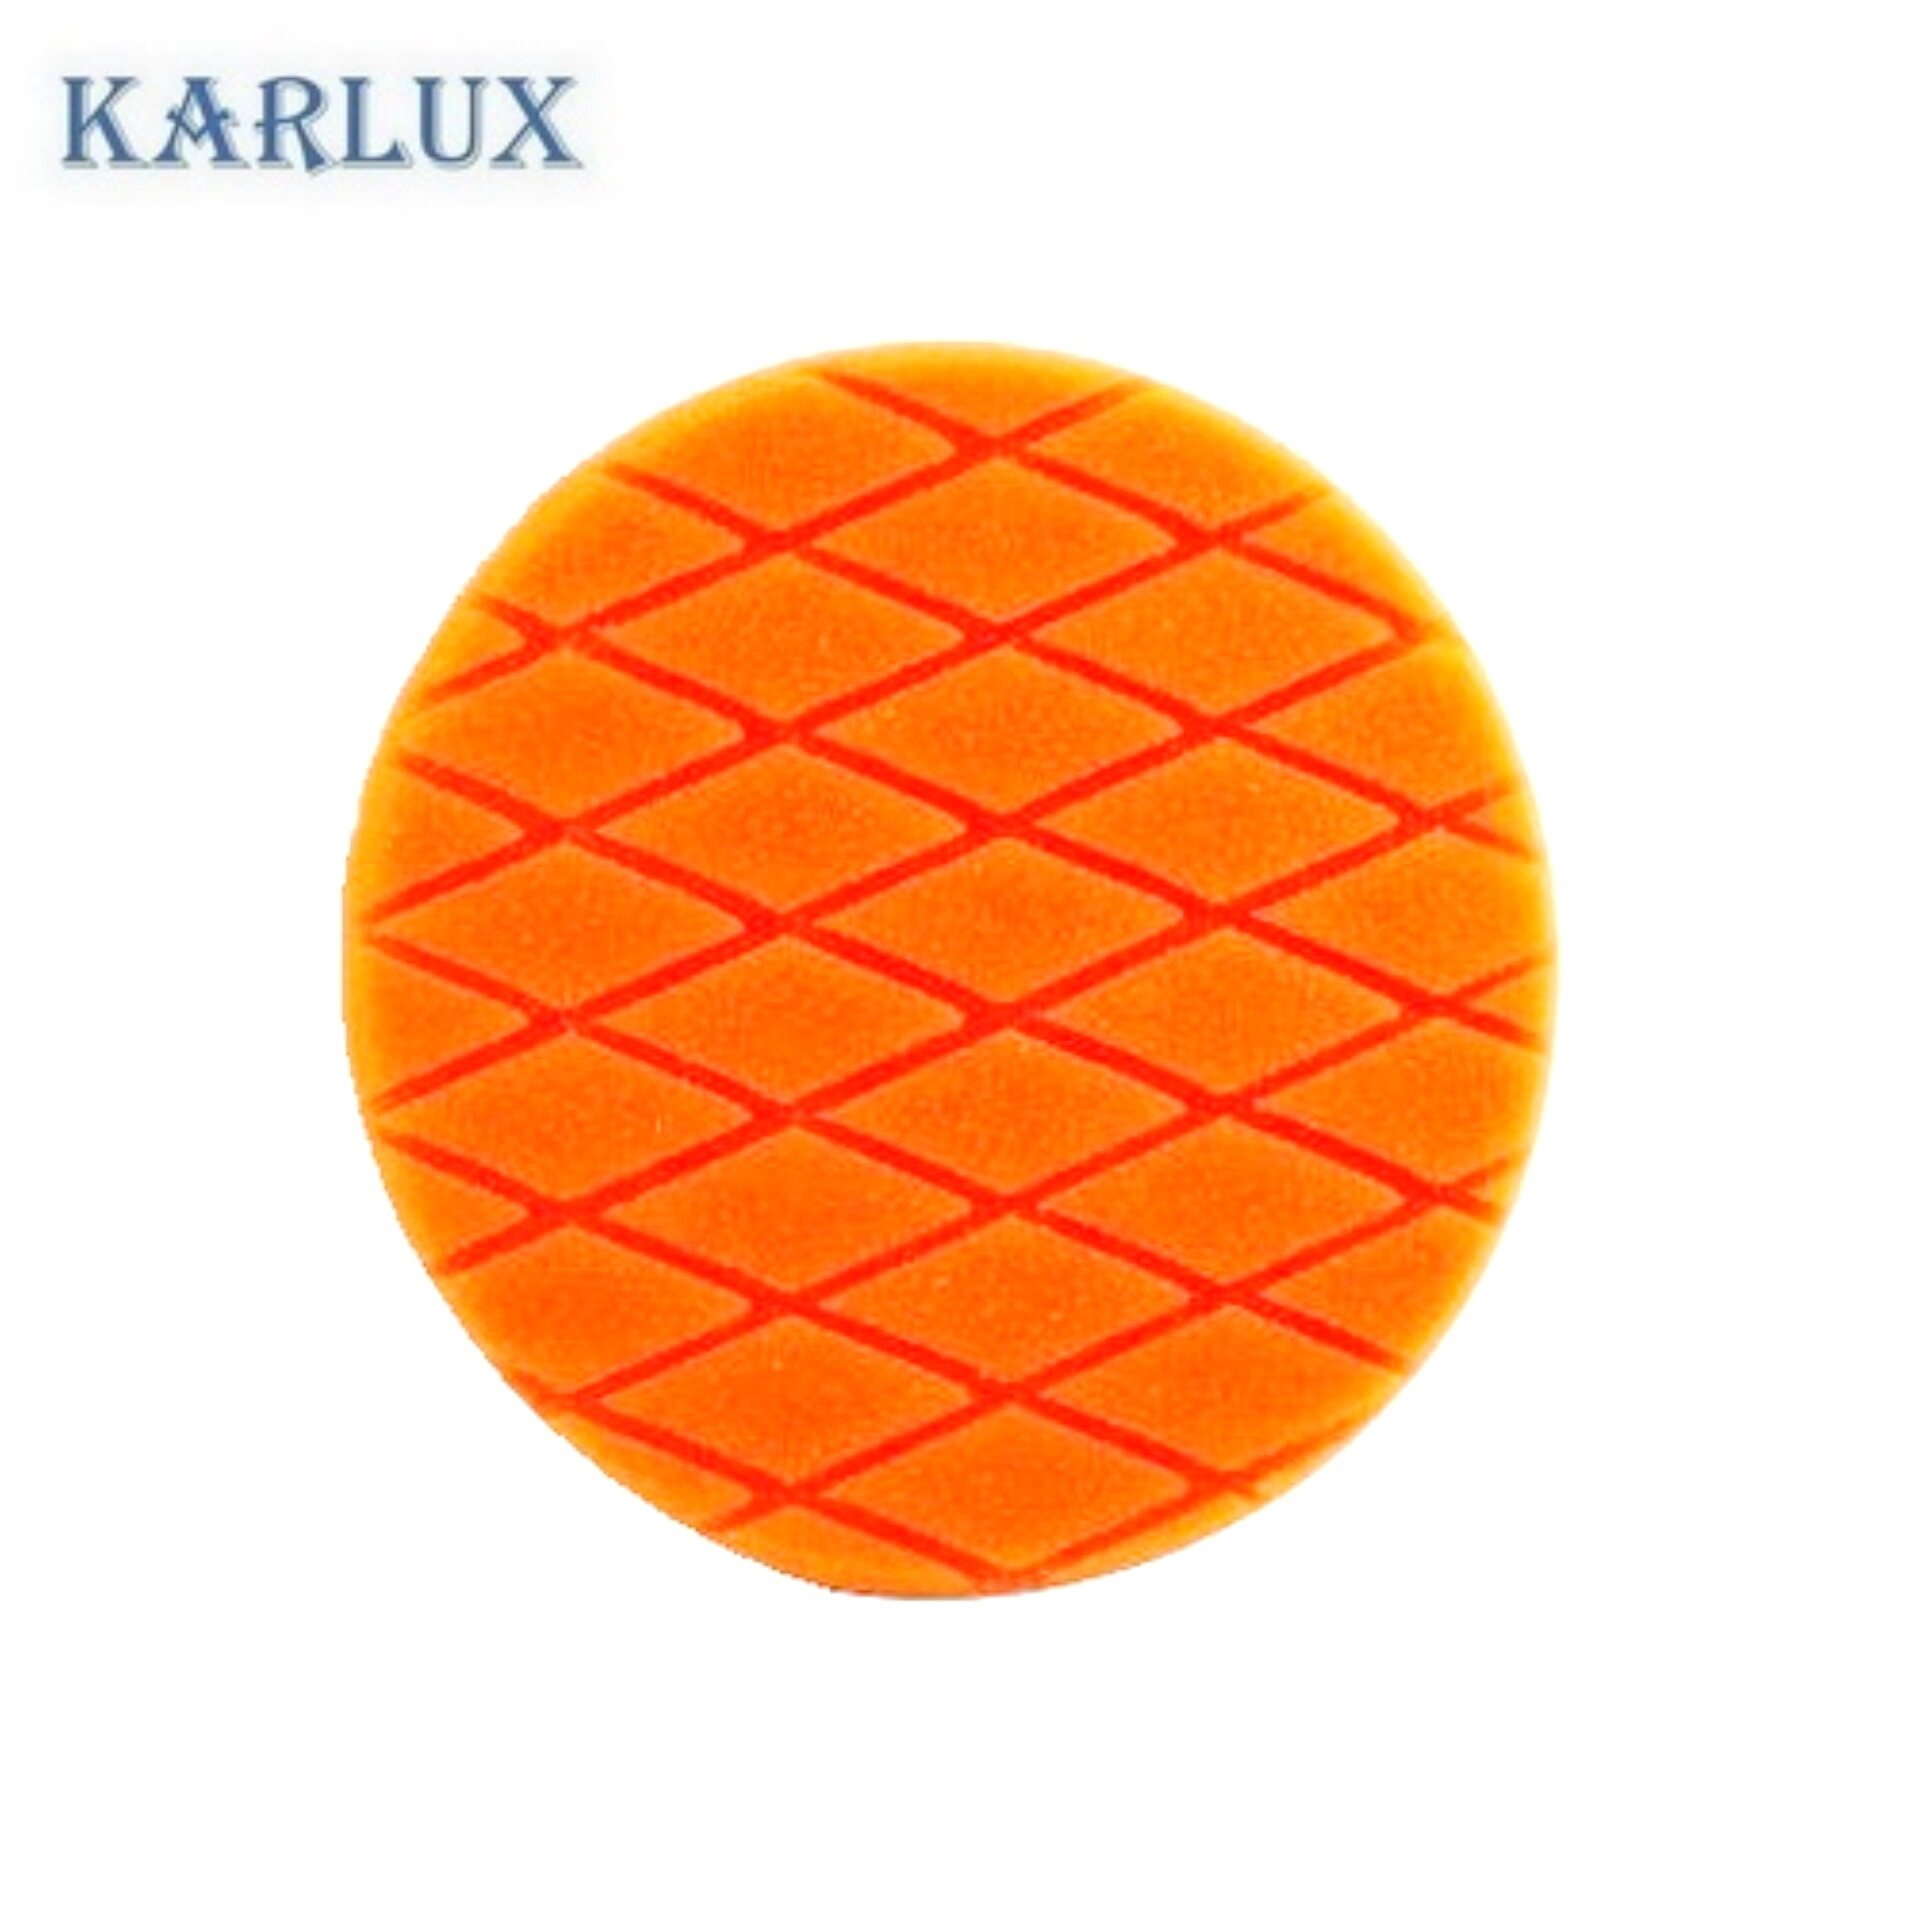 Karlux ฟองน้ำขัดสีรถ 6นิ้ว สีส้ม Orange Light Cut Diamond Cross Foam 6inch (สำหรับแป้นจับ 5นิ้ว เพื่อเว้นขอบ)